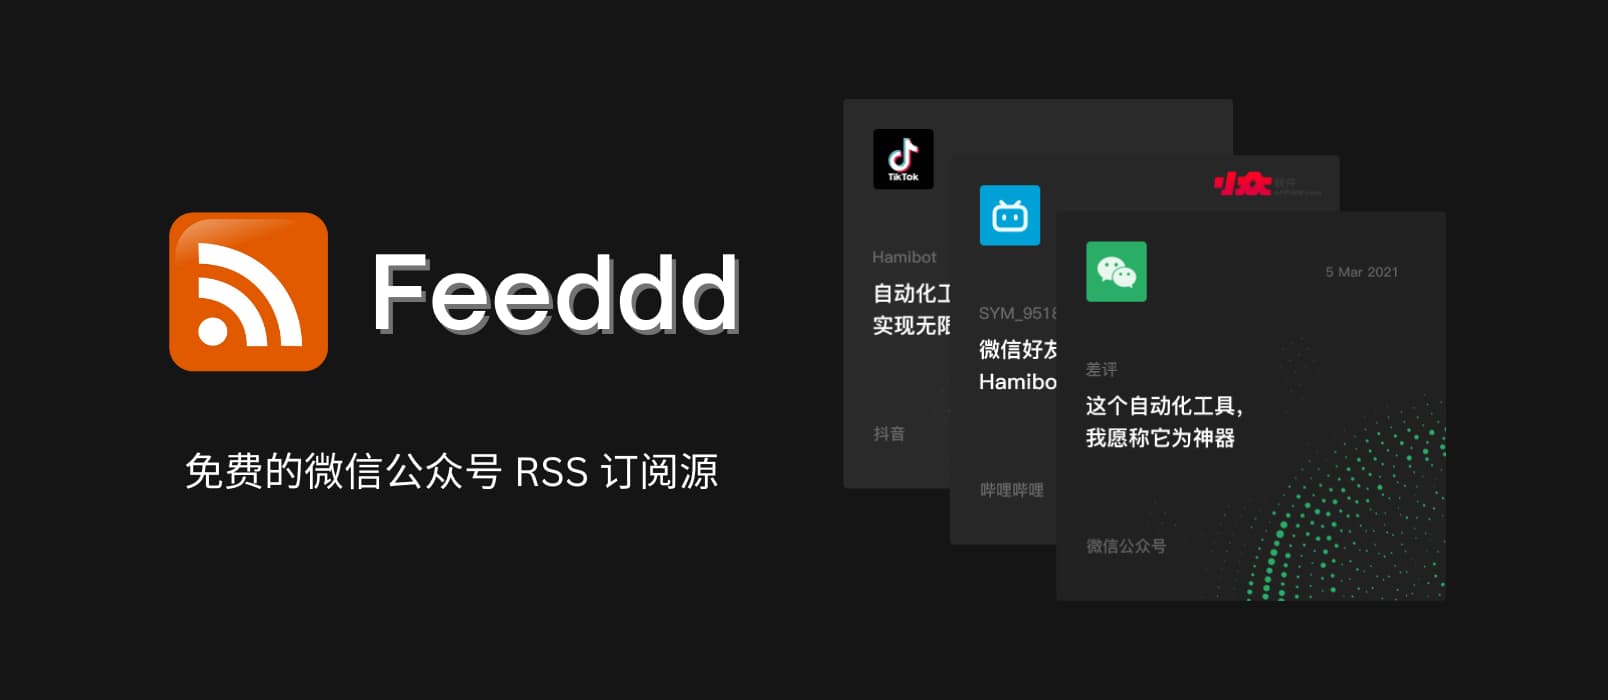 Feeddd - 分布式，免费的微信公众号 RSS 订阅源，已超过 30000+ 微信公众号